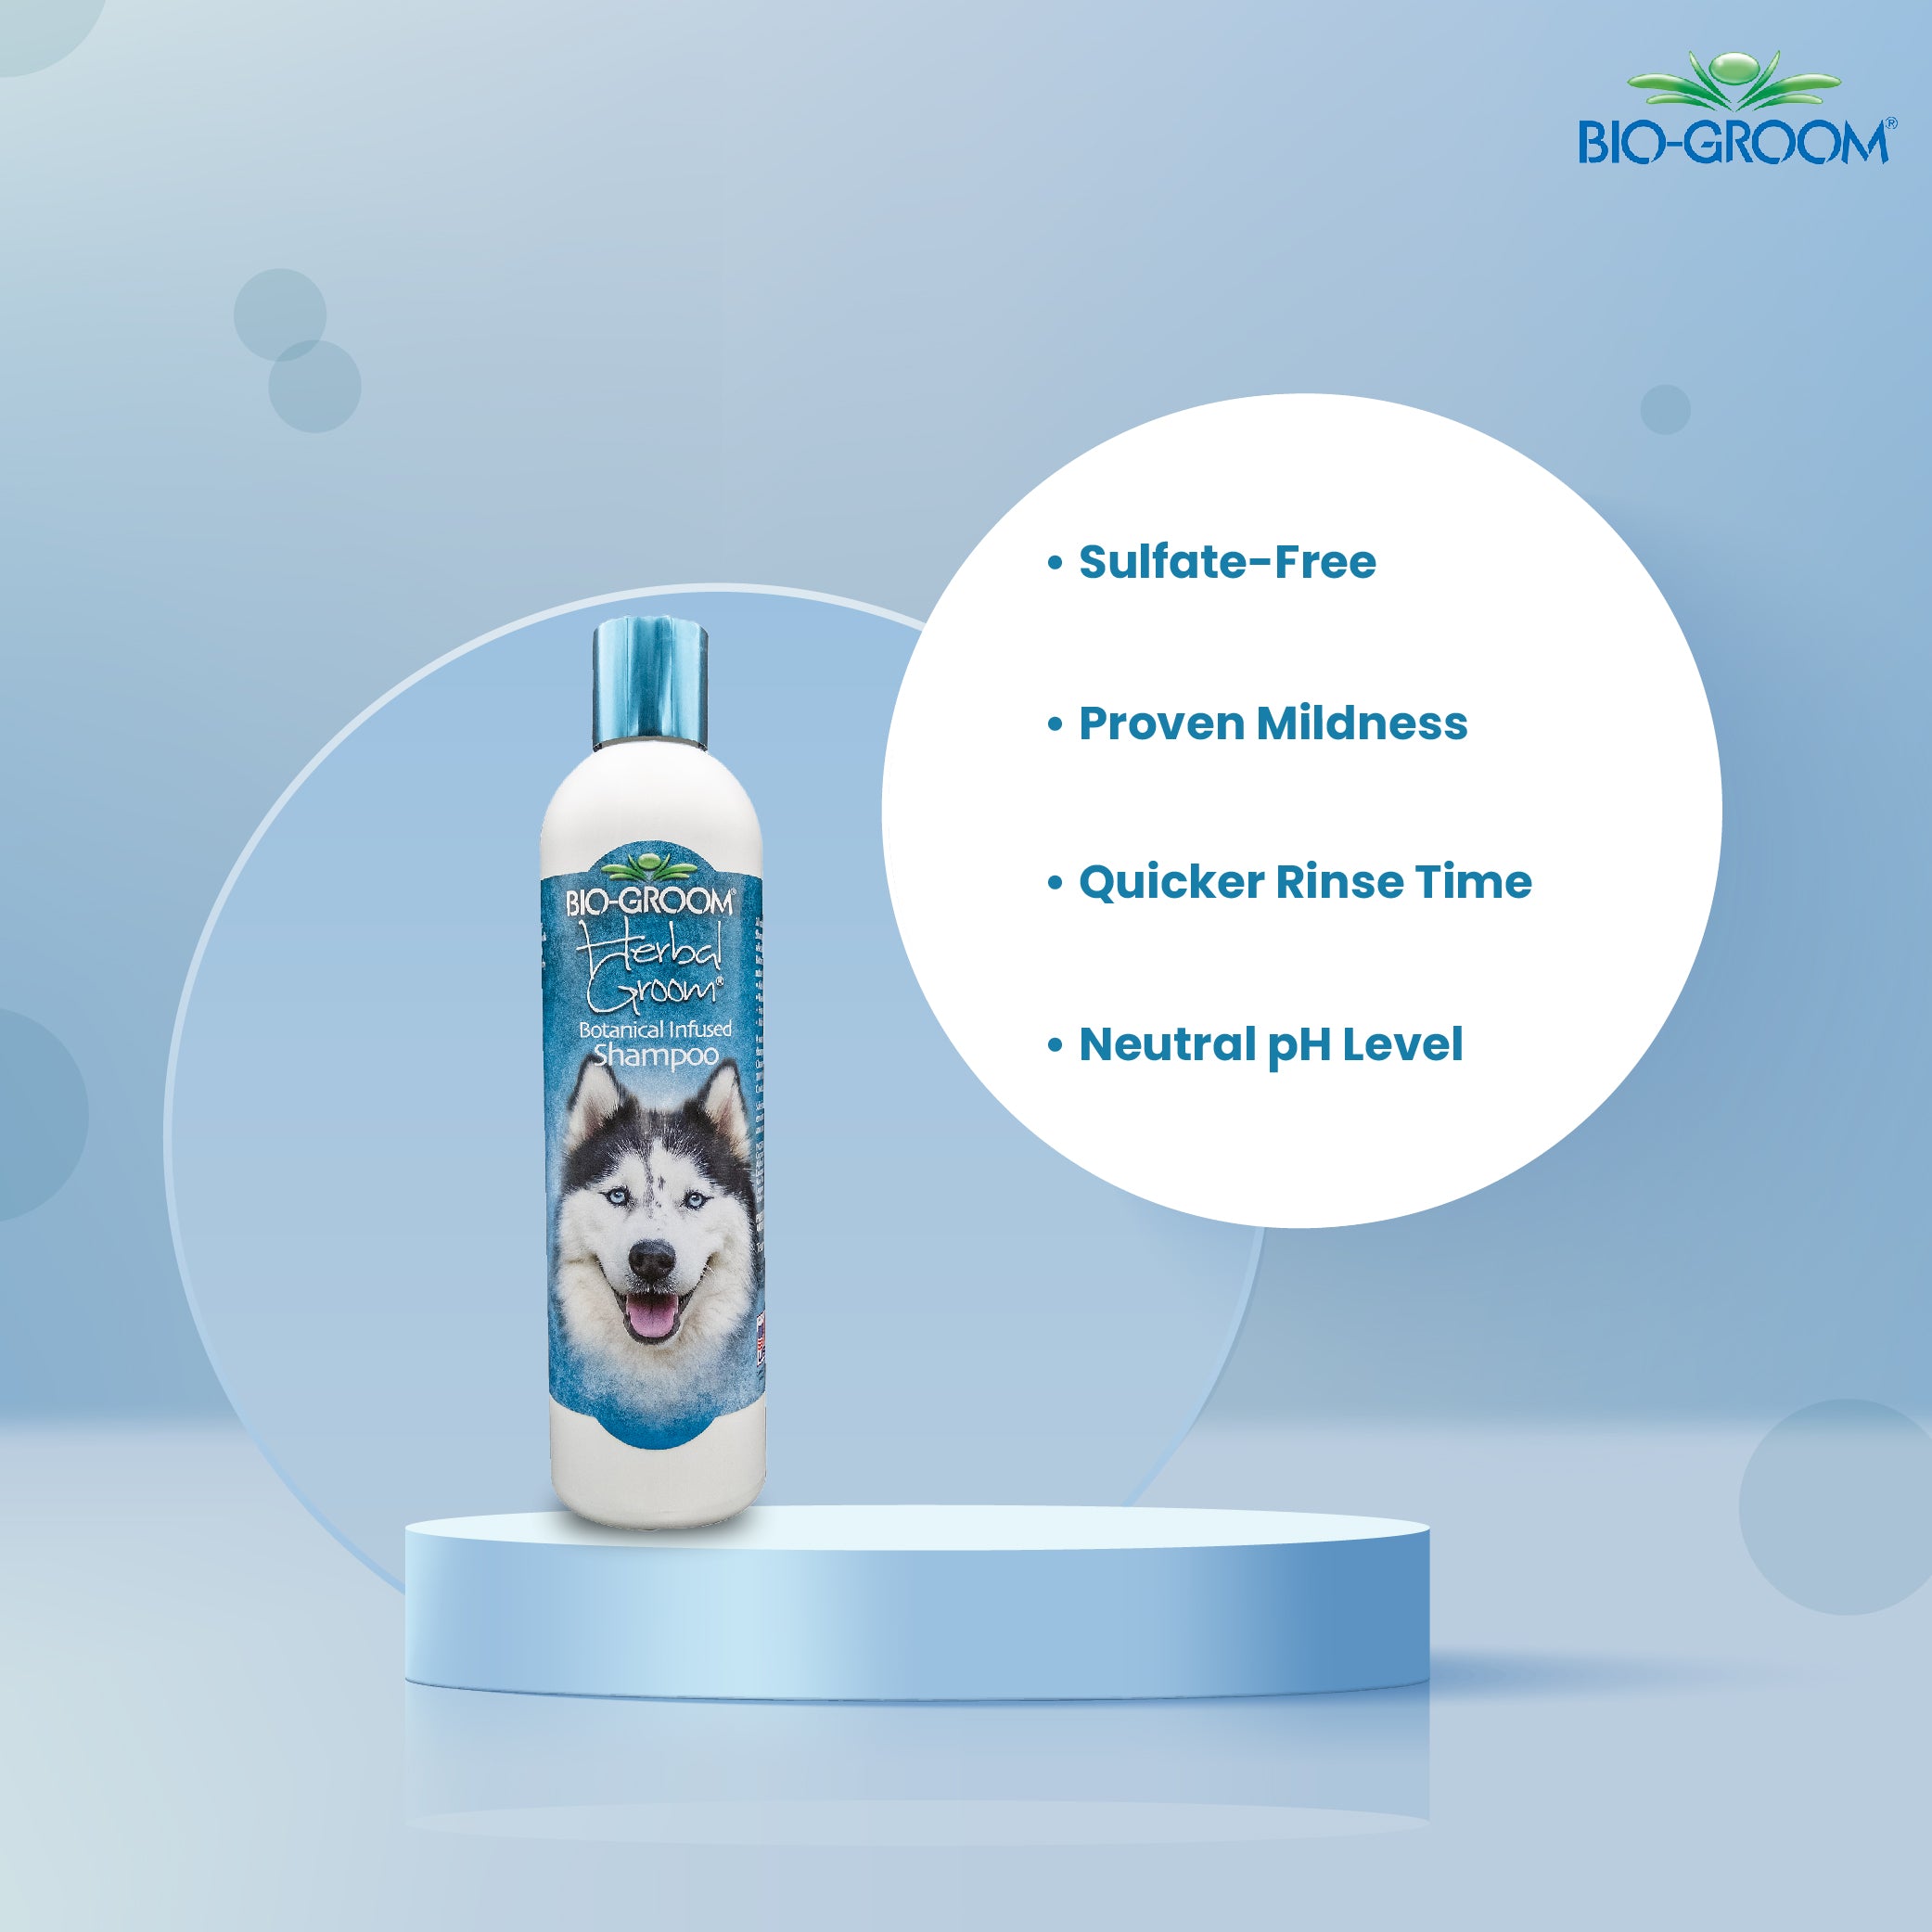 Bio-Groom Herbal Groom Dog Conditioning Shampoo